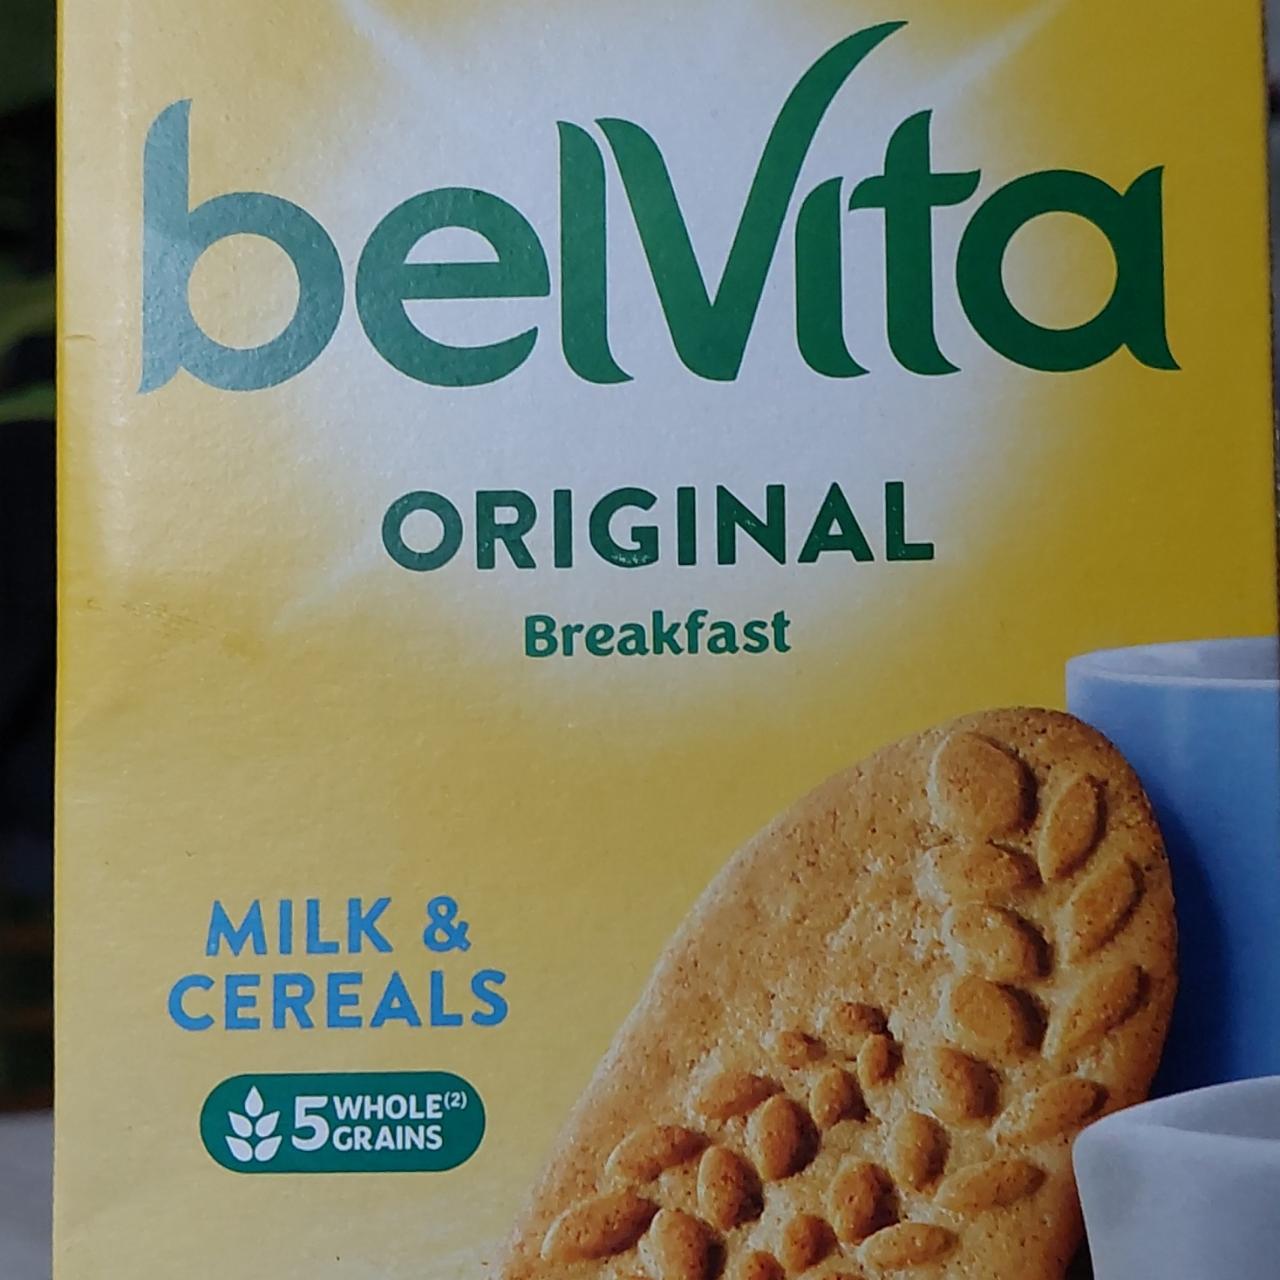 Zdjęcia - Original Milk and cereals belvita